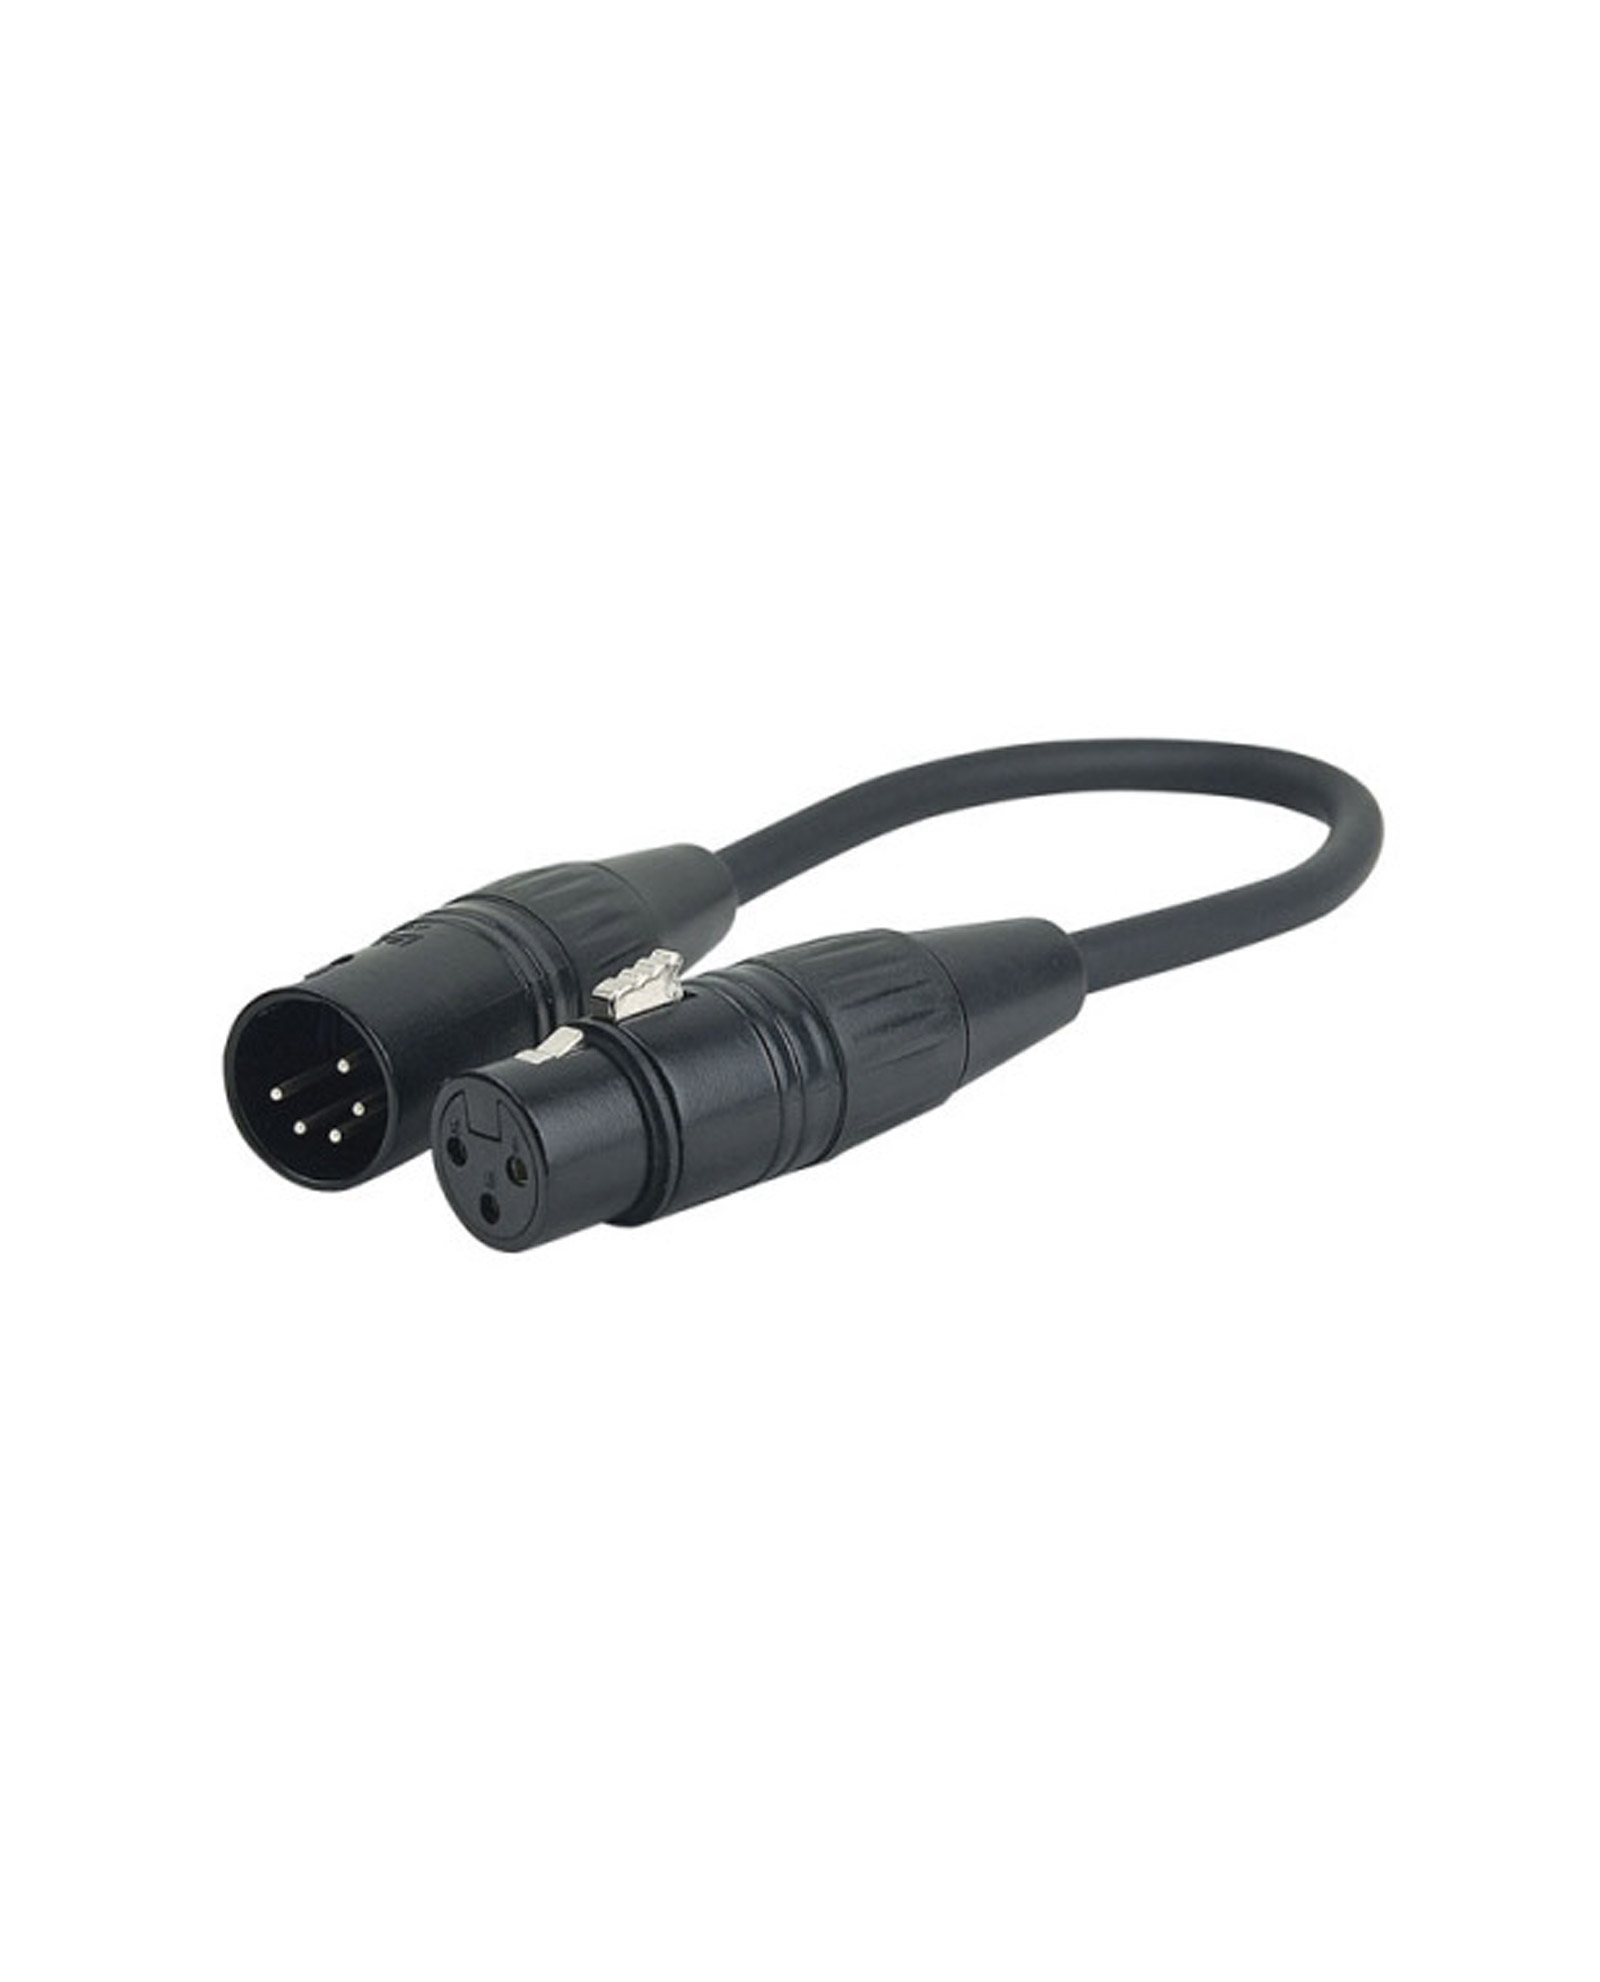 5 Pin Xlr Male To 3 Pin Xlr Female Dmx Cable Adaptor 25cm